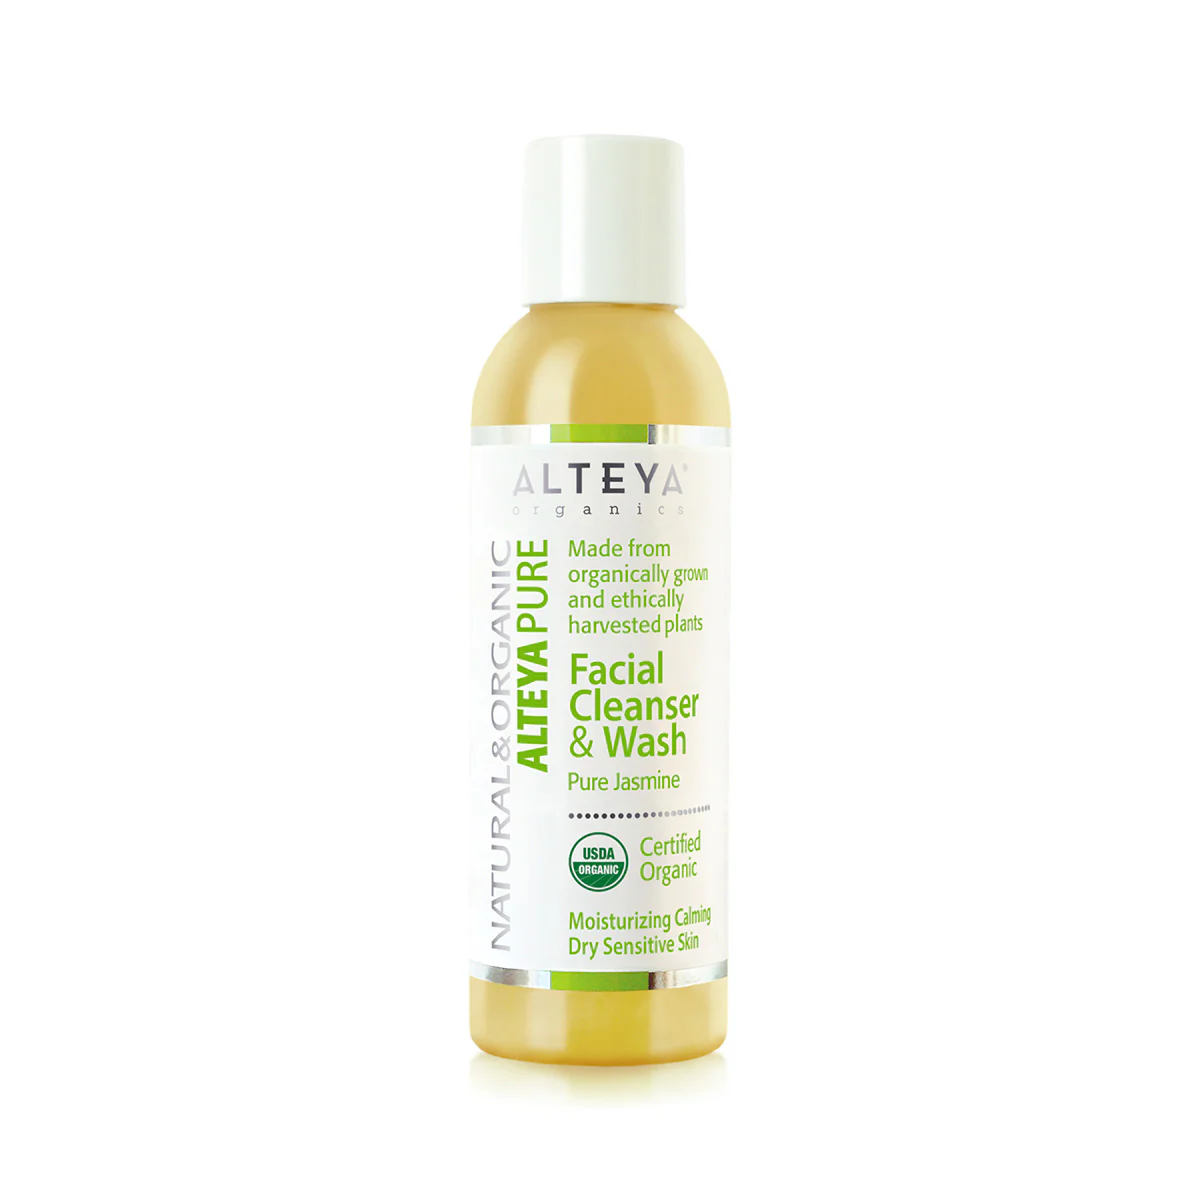 Alteya Organics Cleanser Dry Sensitive Skin review and promo code